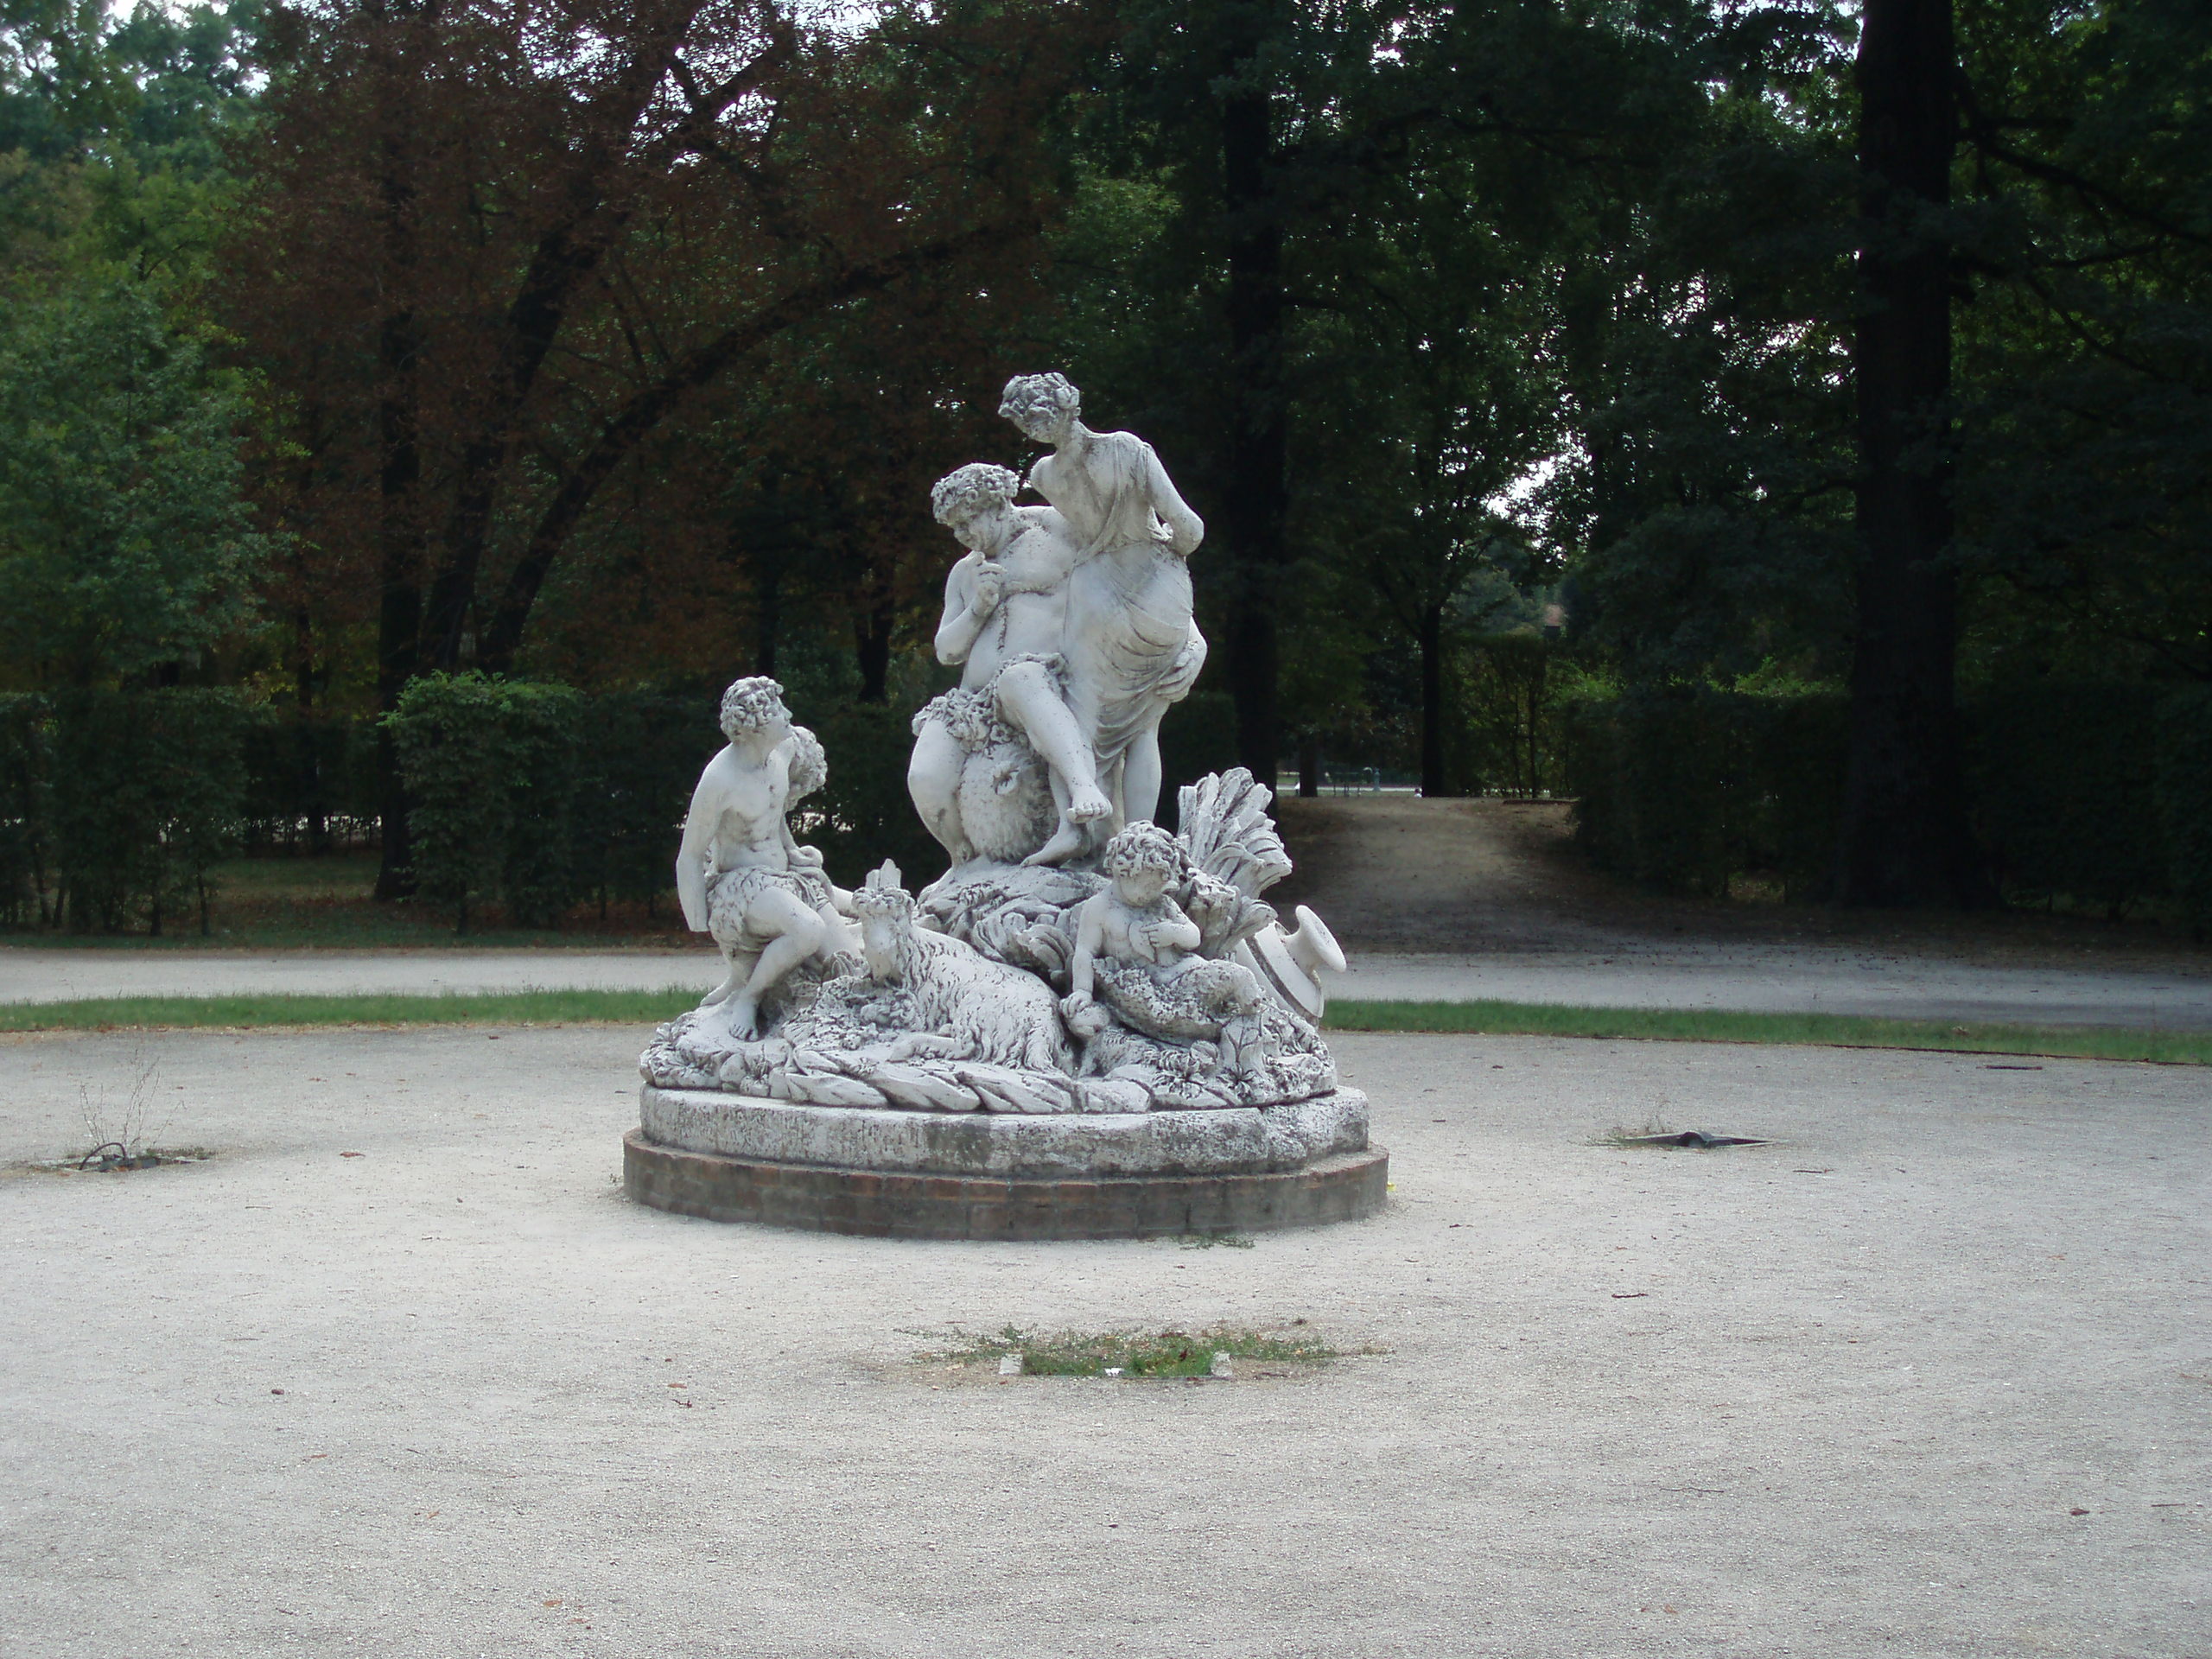 File:Statua parco ducale di Parma.JPG - Wikimedia Commons